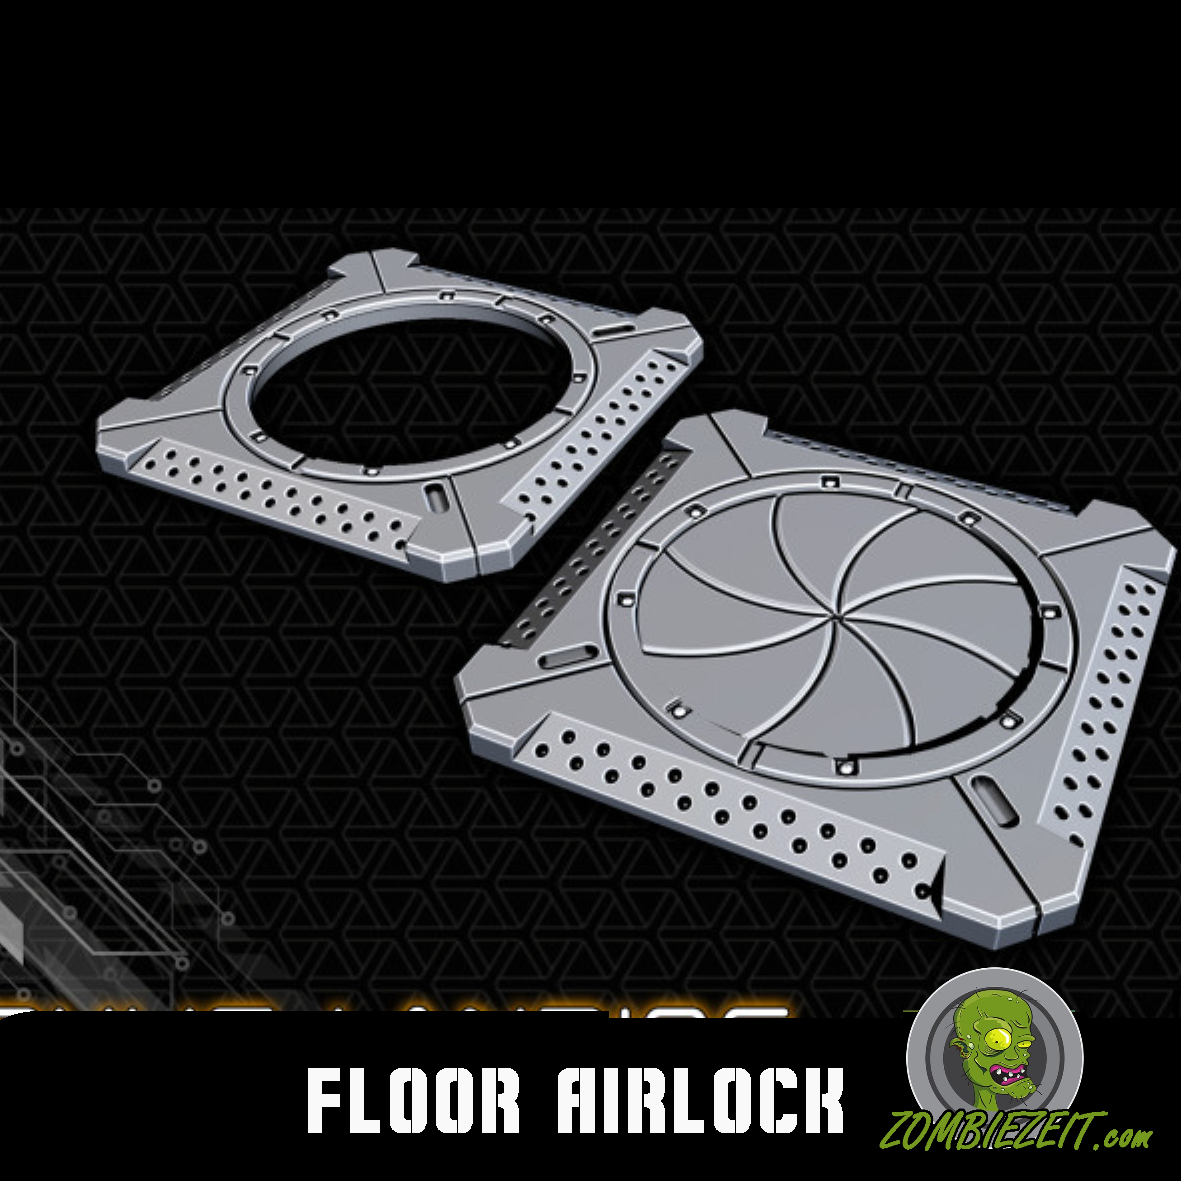 Floor Airlock